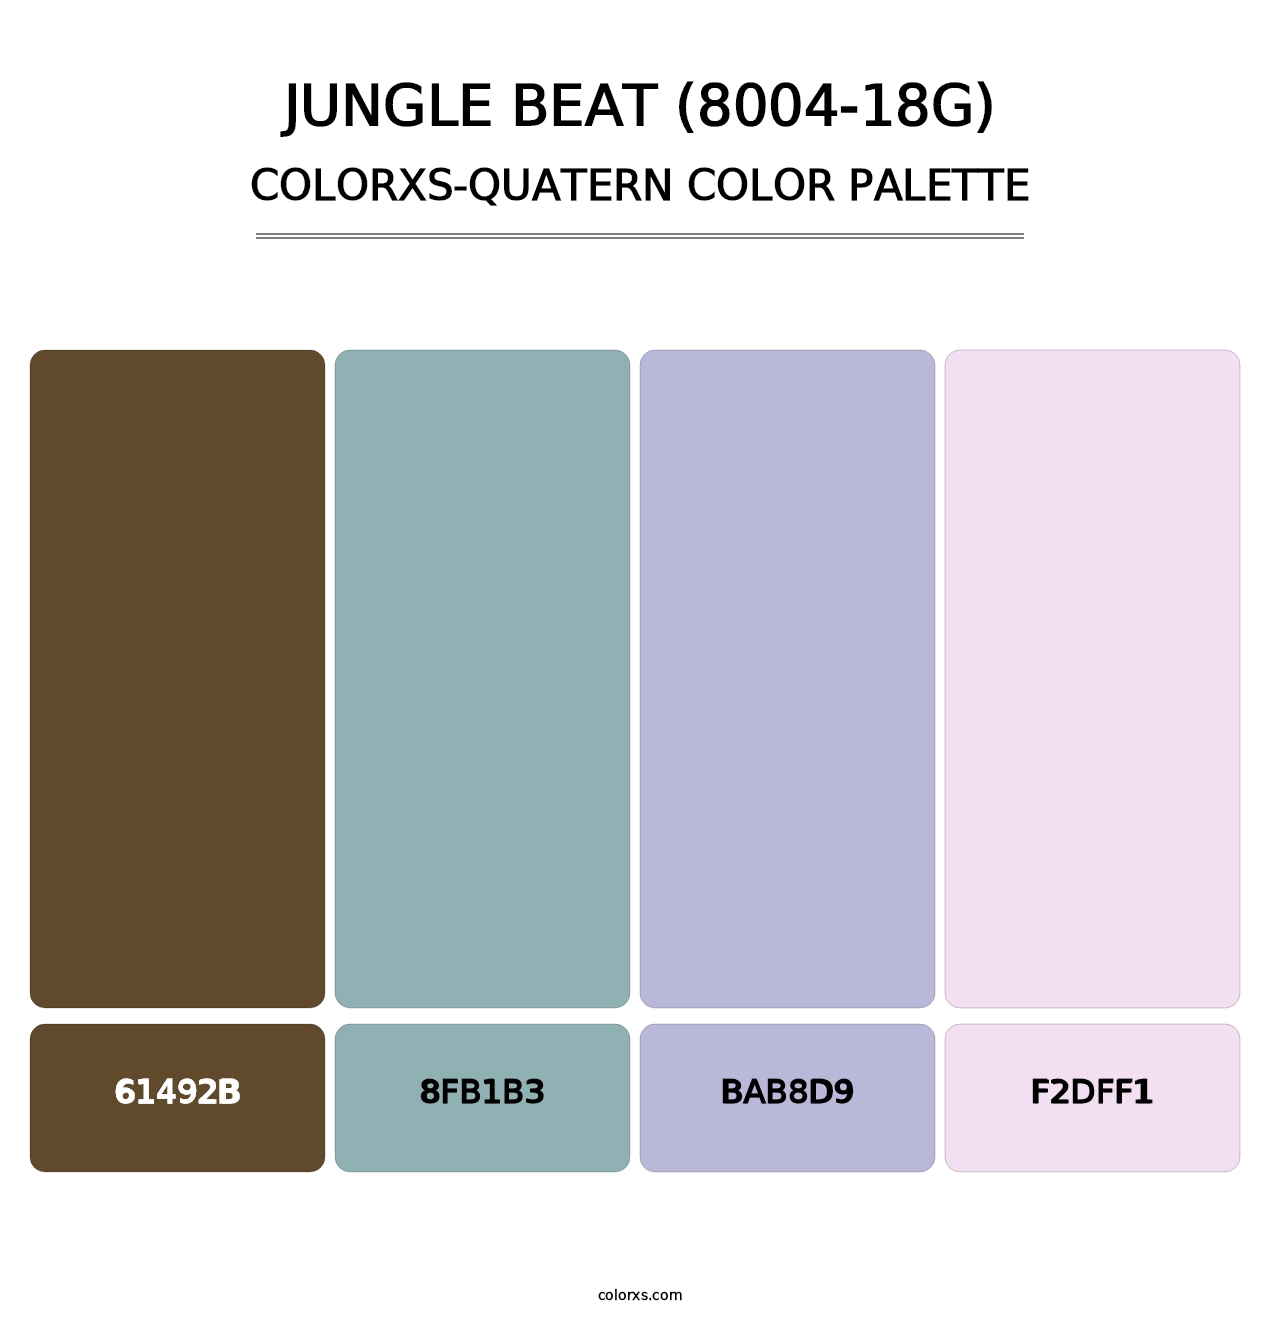 Jungle Beat (8004-18G) - Colorxs Quatern Palette